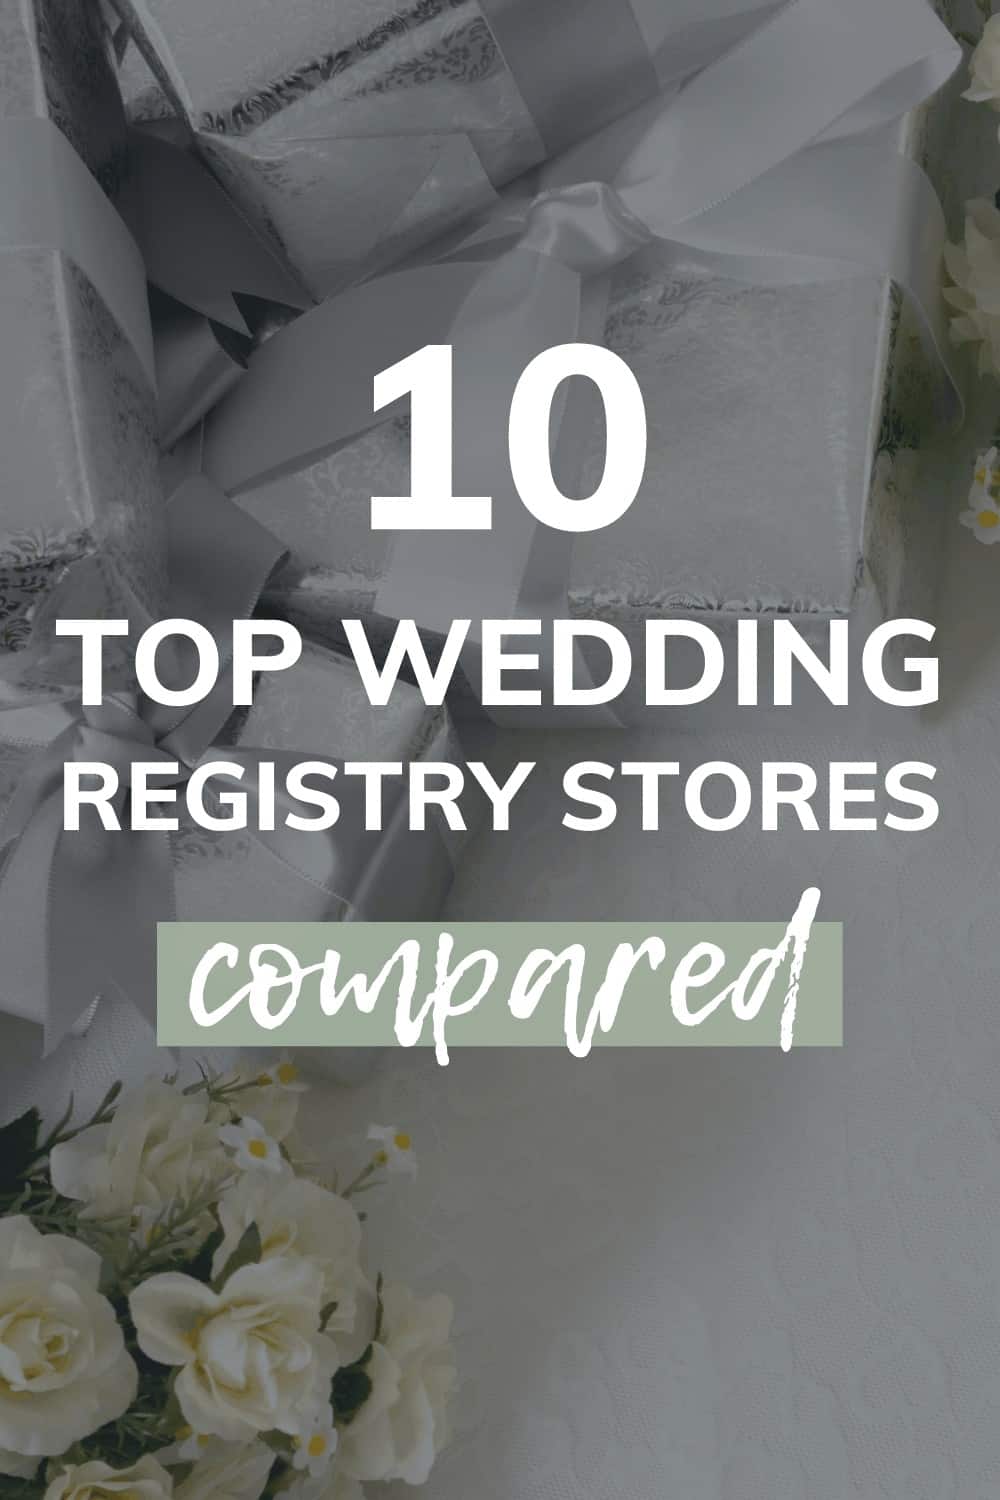 Top 10 Must-Have Wedding Registry Items | Every Last Detail